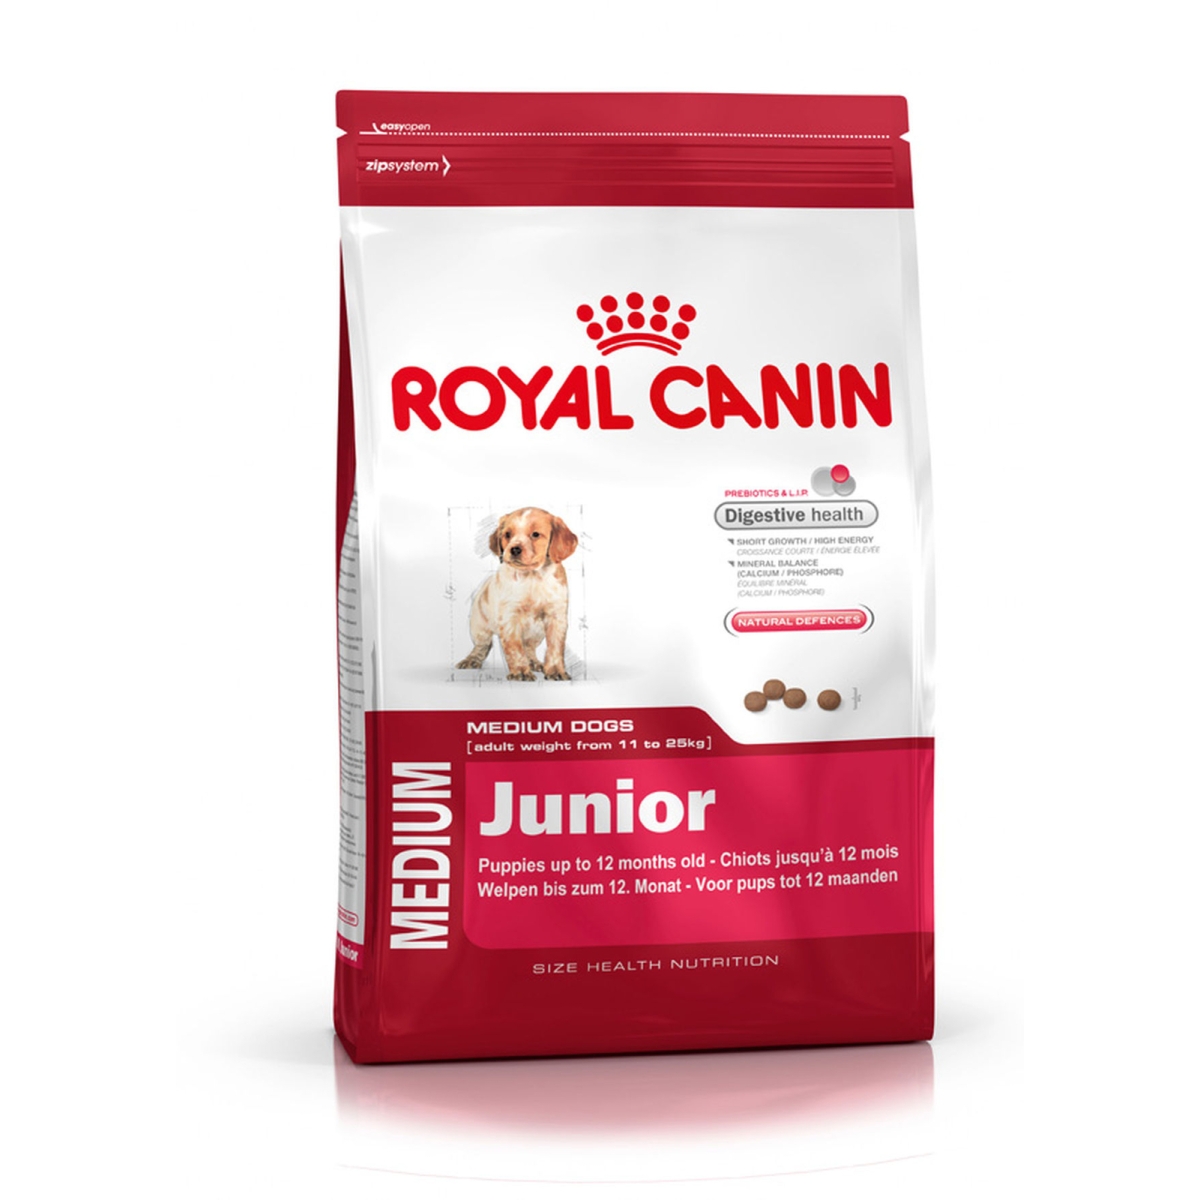 Royal Canin koeratoit keskmist kasvu kutsikatele 15 kg